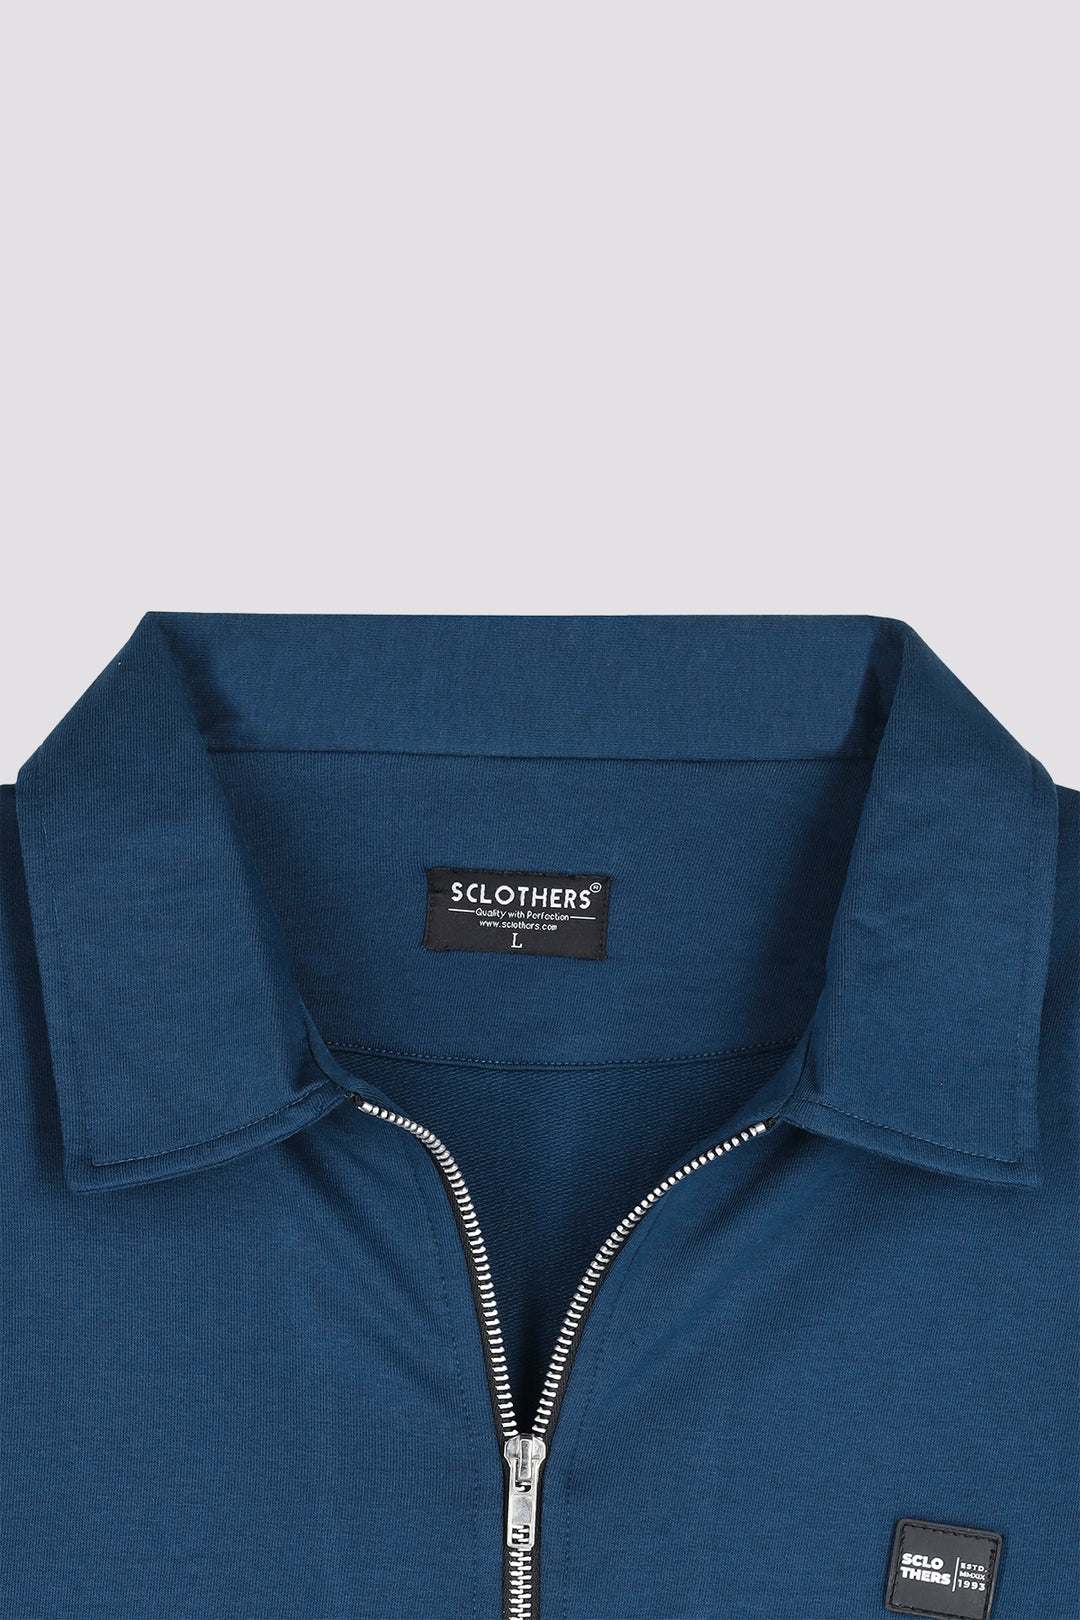 Sclothers Blue Zipper Jacket - W23 - MJ0013R